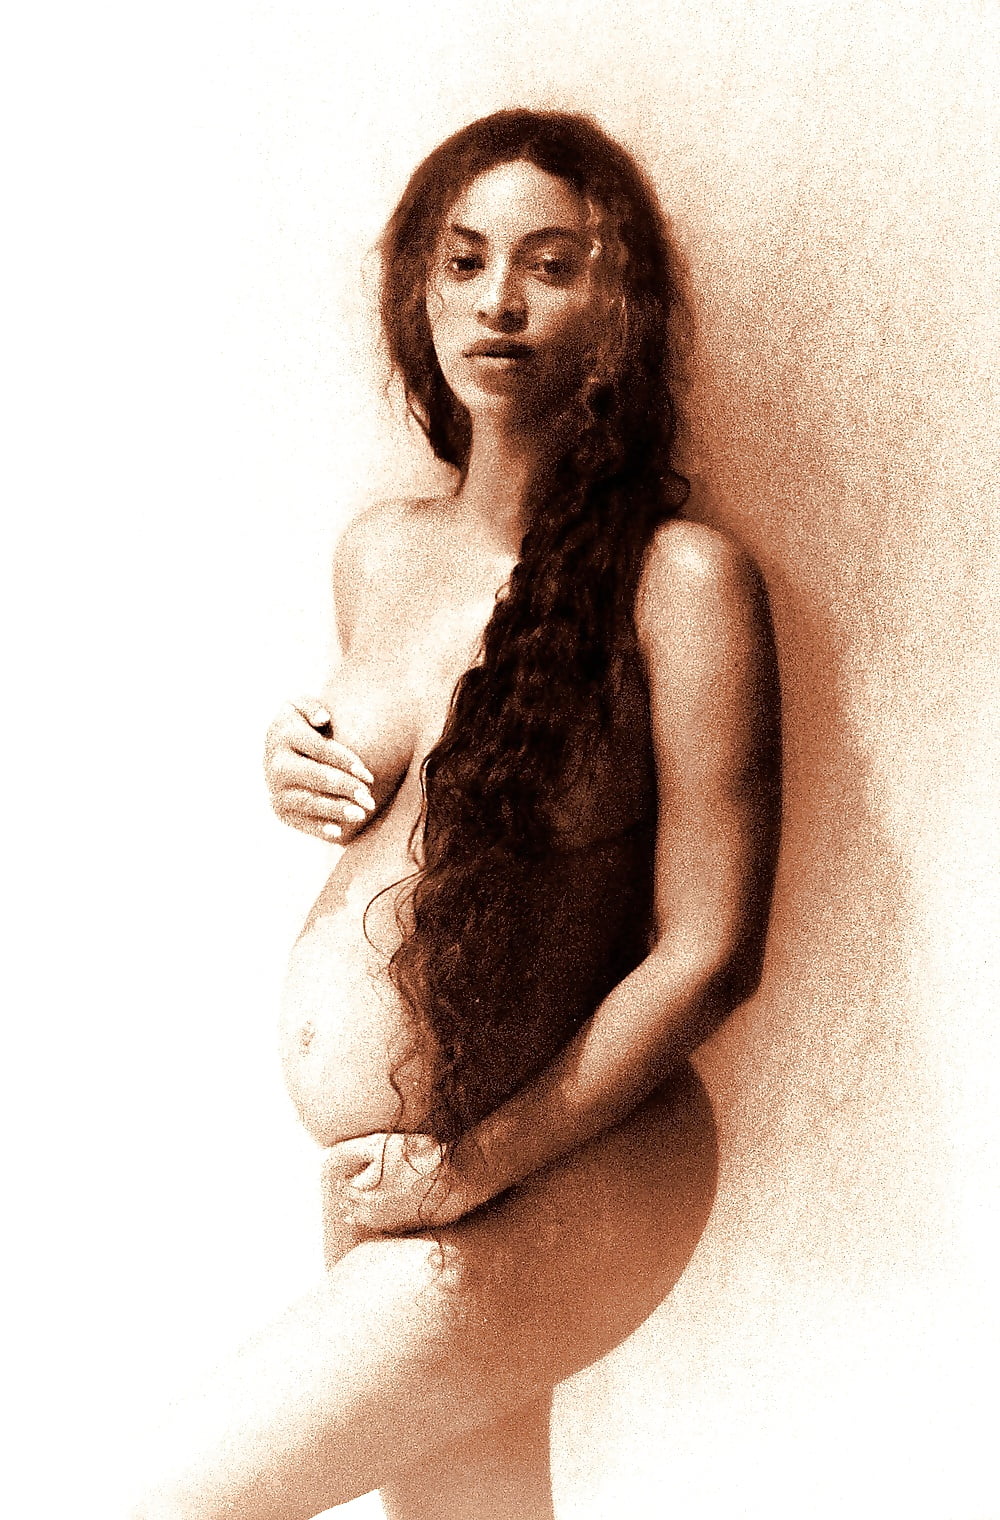 Pics of nude pregnant women